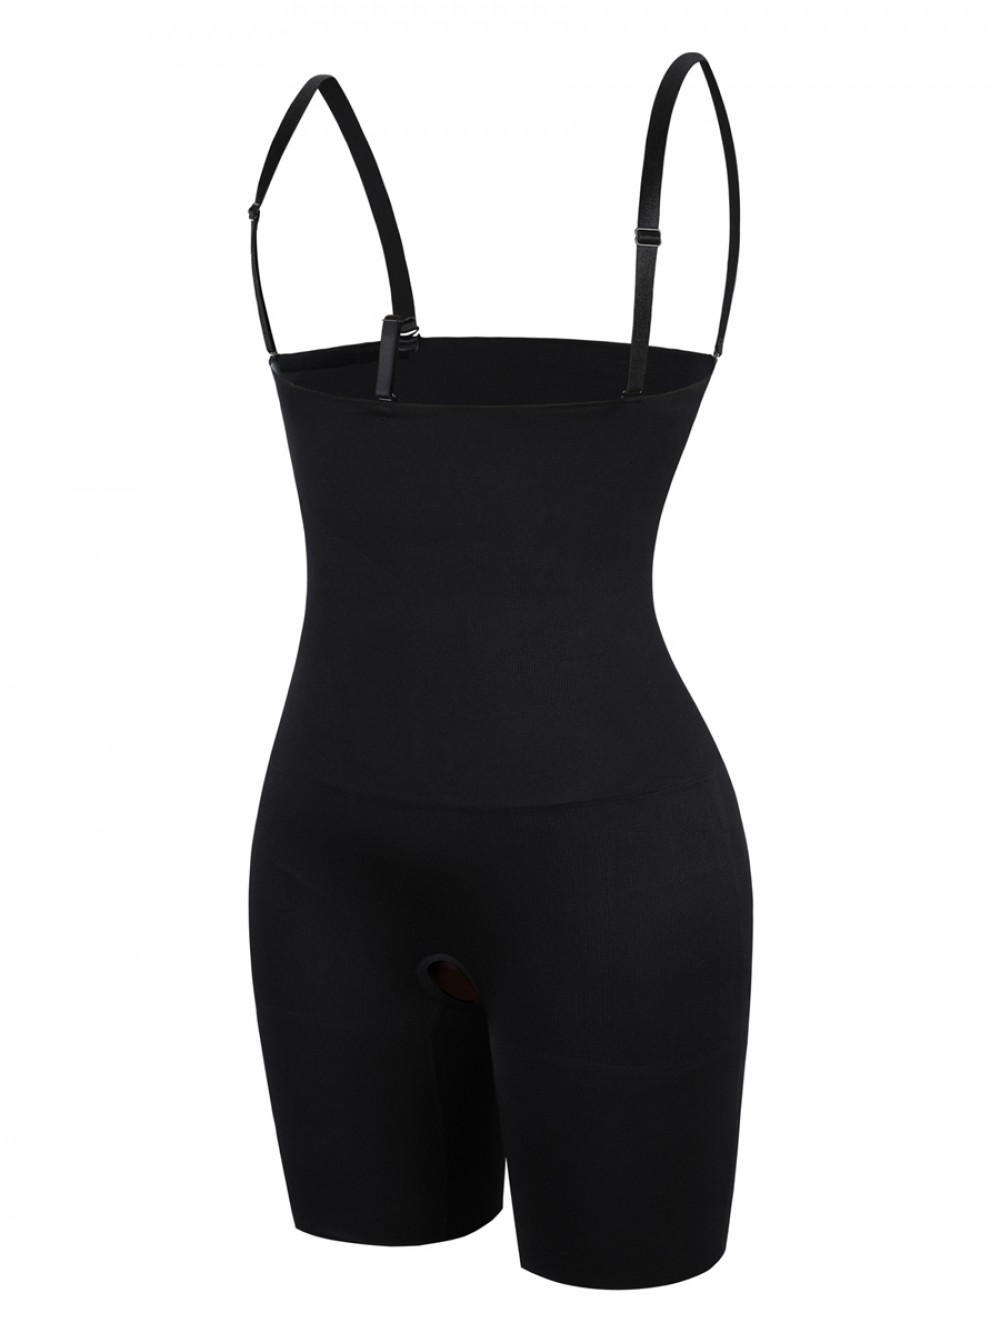 Black Seamless Shapewear Shorts Adjustable Straps Ultra Light